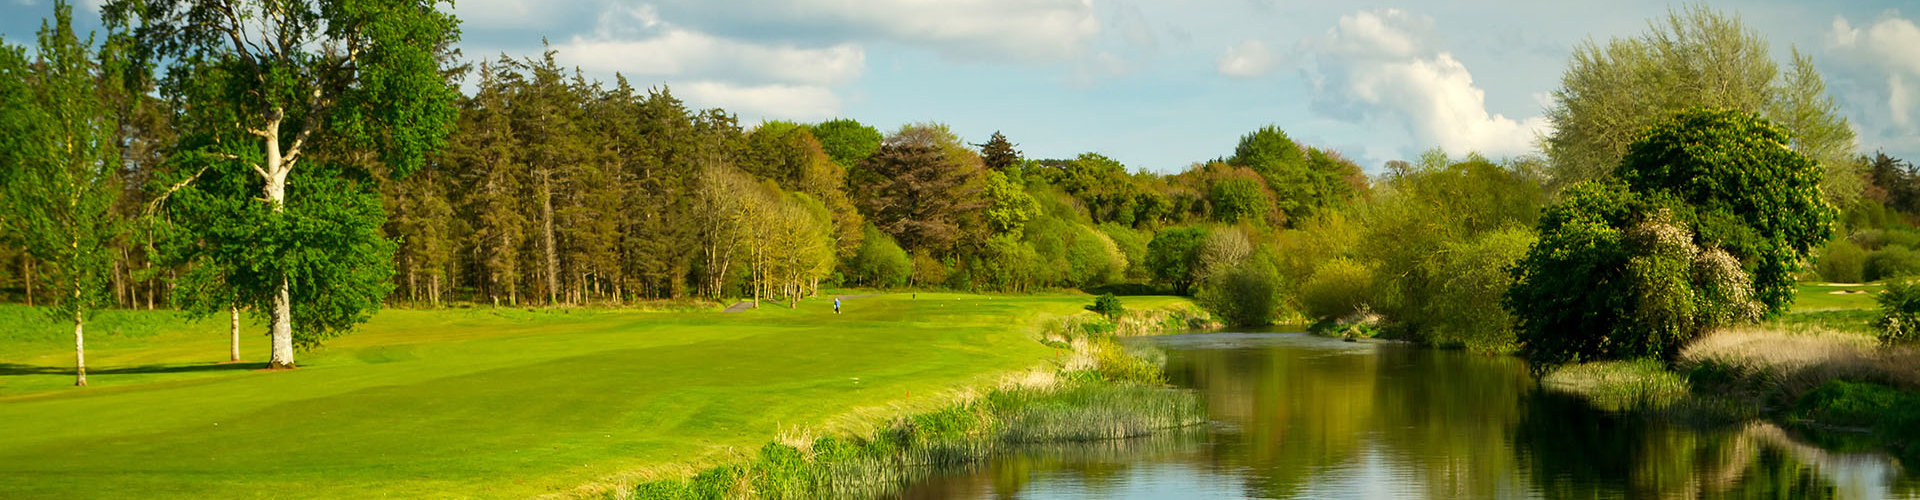 Golf in Irlanda